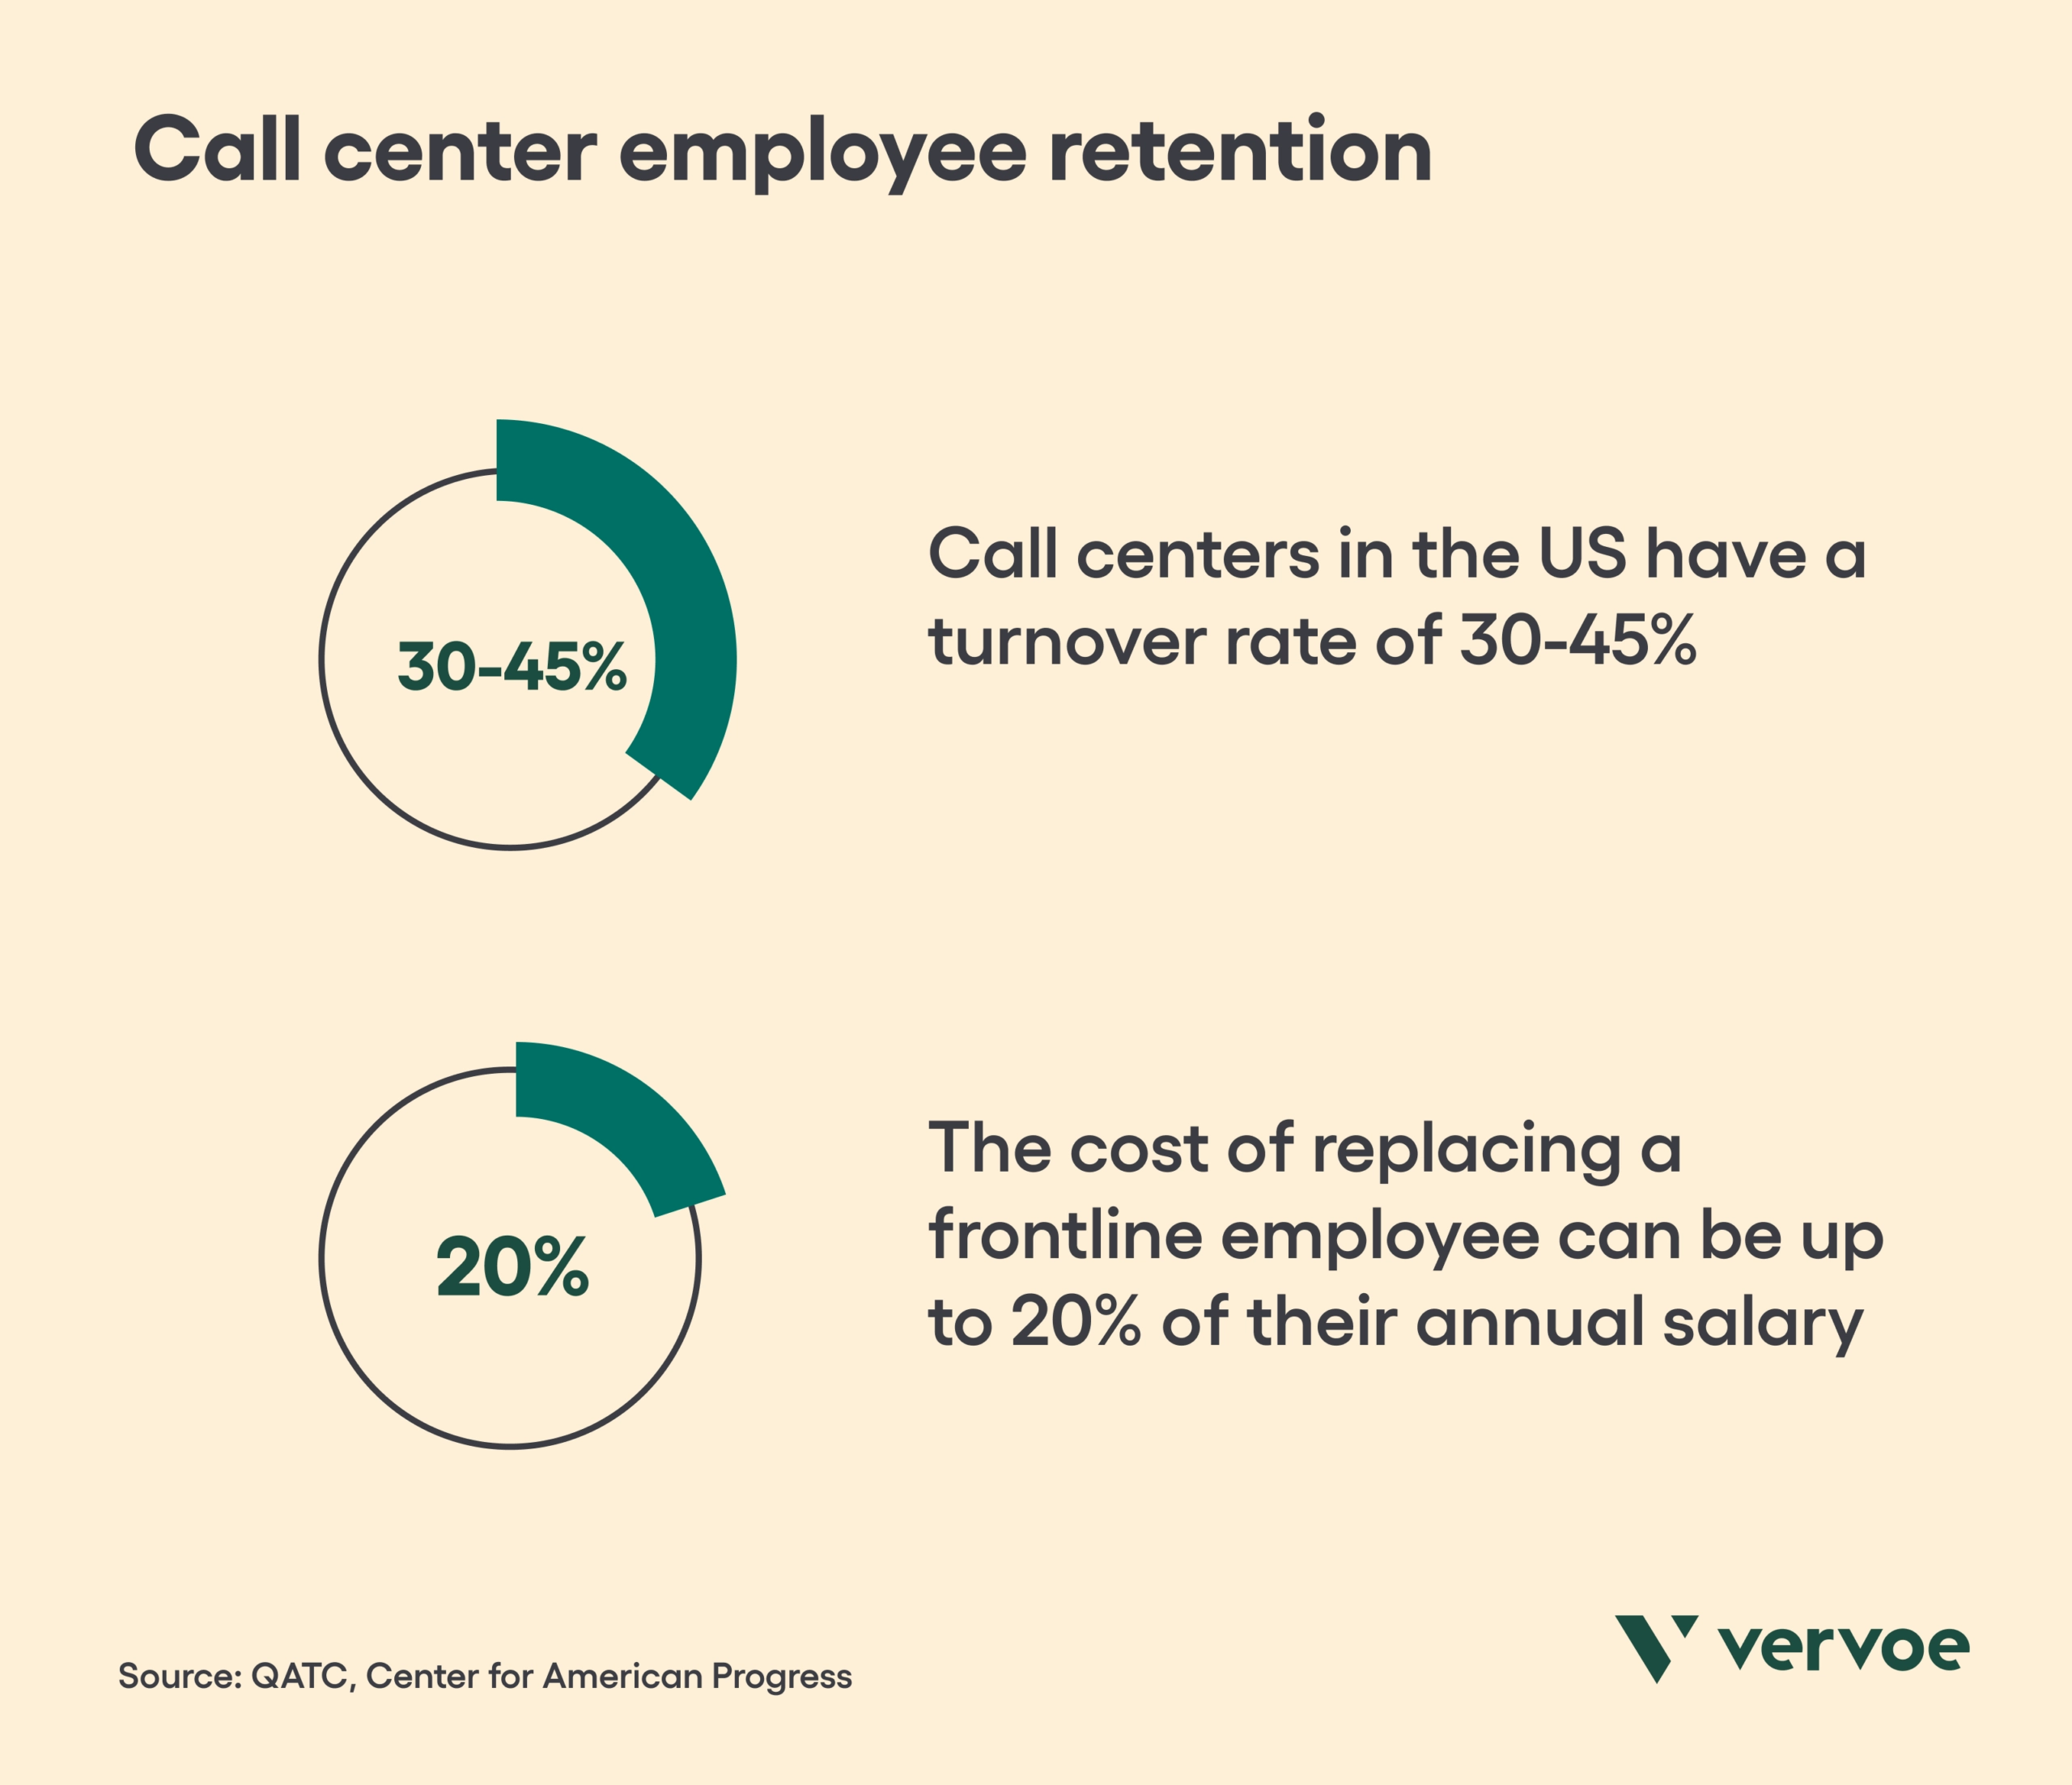 Call center employee retention